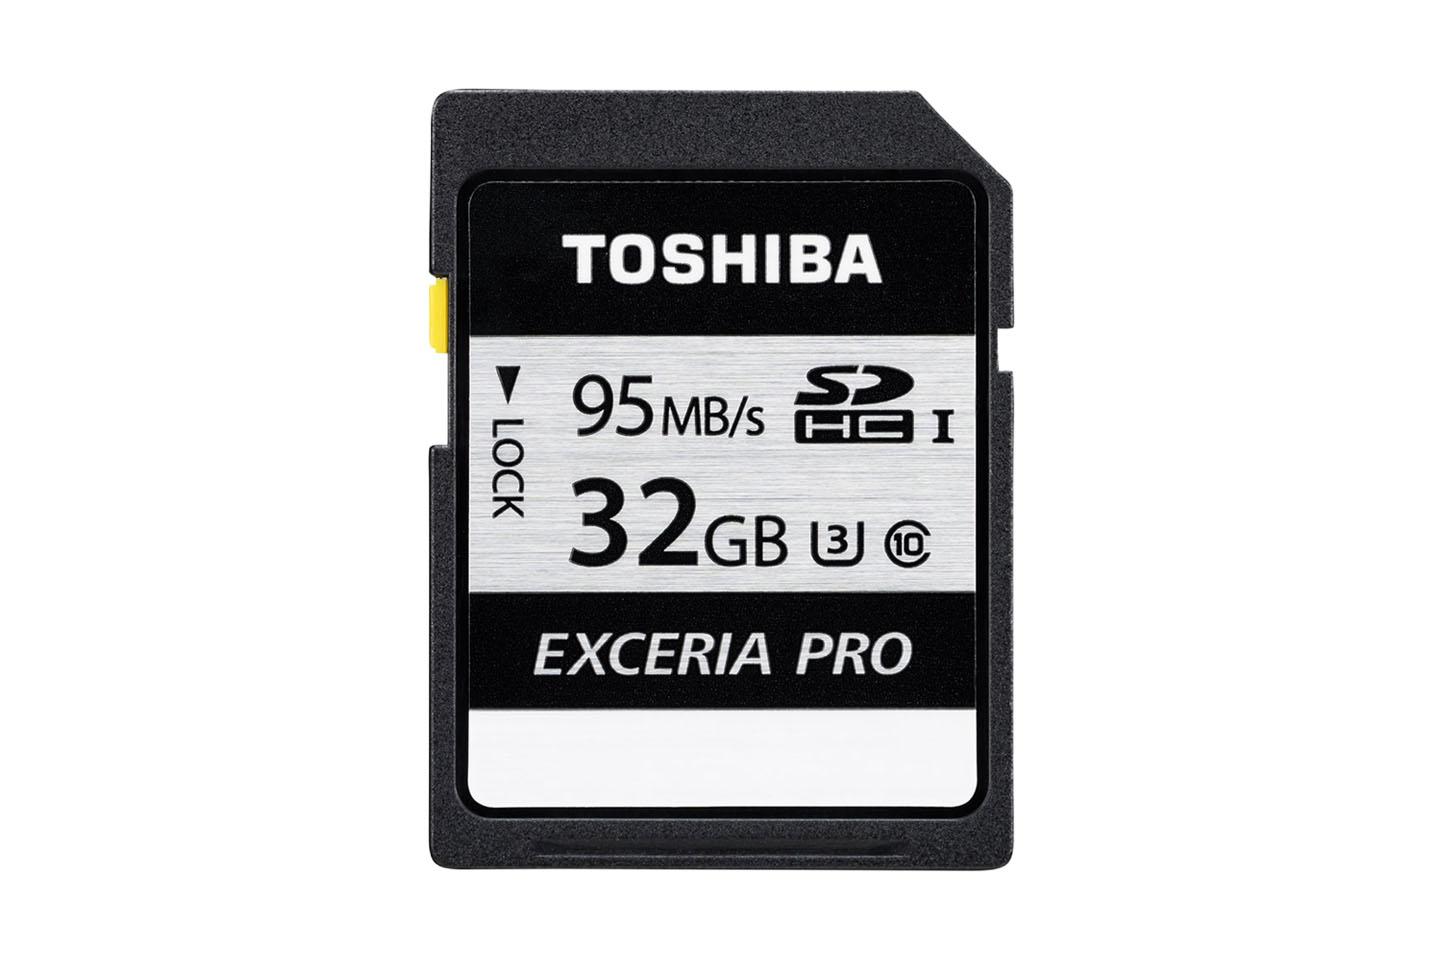 SDHCカード32GB UHS1(TOSHIBA)